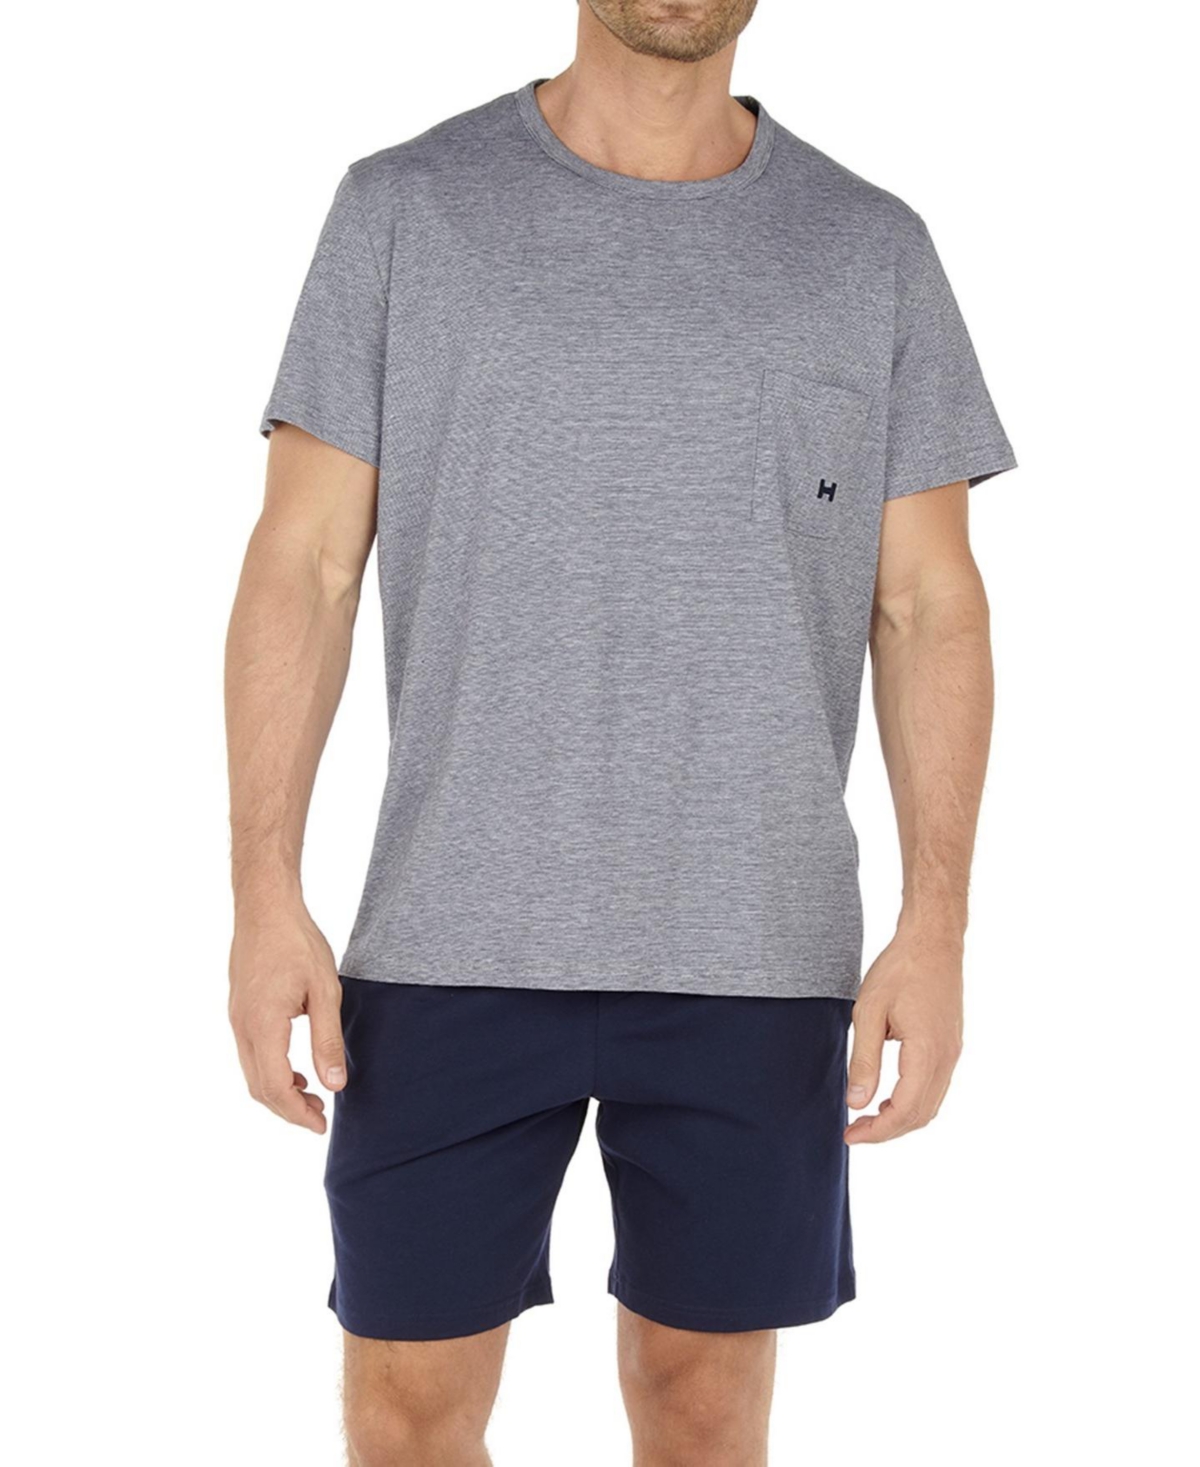 Men's Cotton Comfort Short Sleeve Short Pajamas Set - Navy